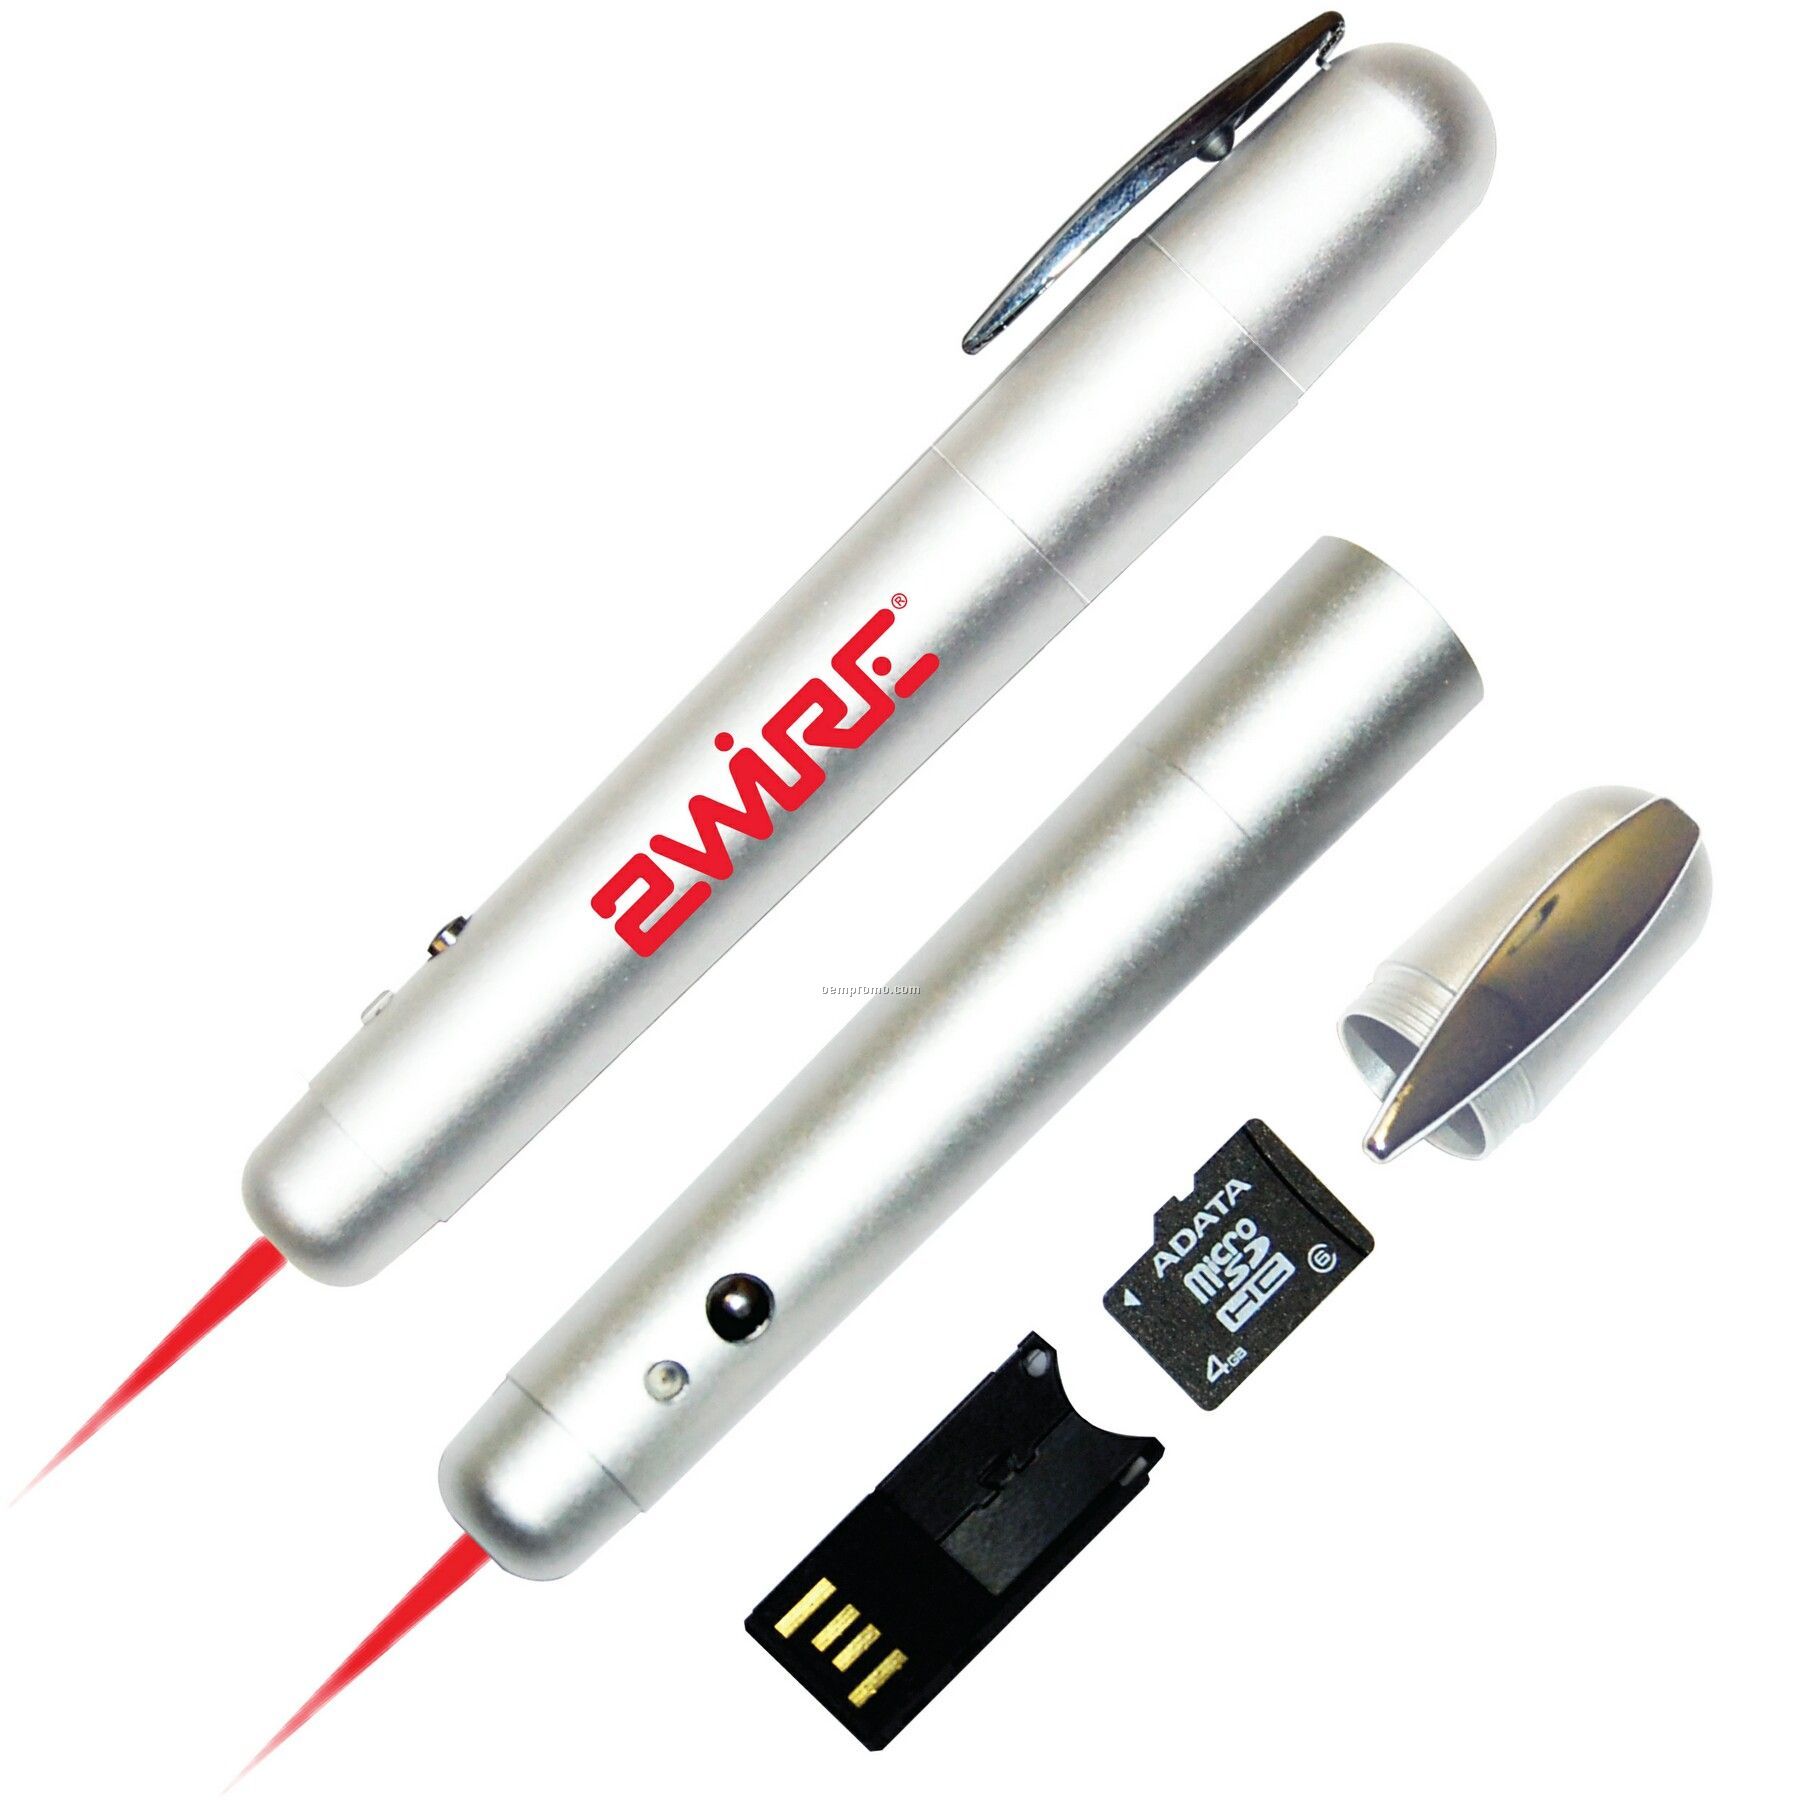 Alpec Comet USB Laser Pointer - 2 Gb